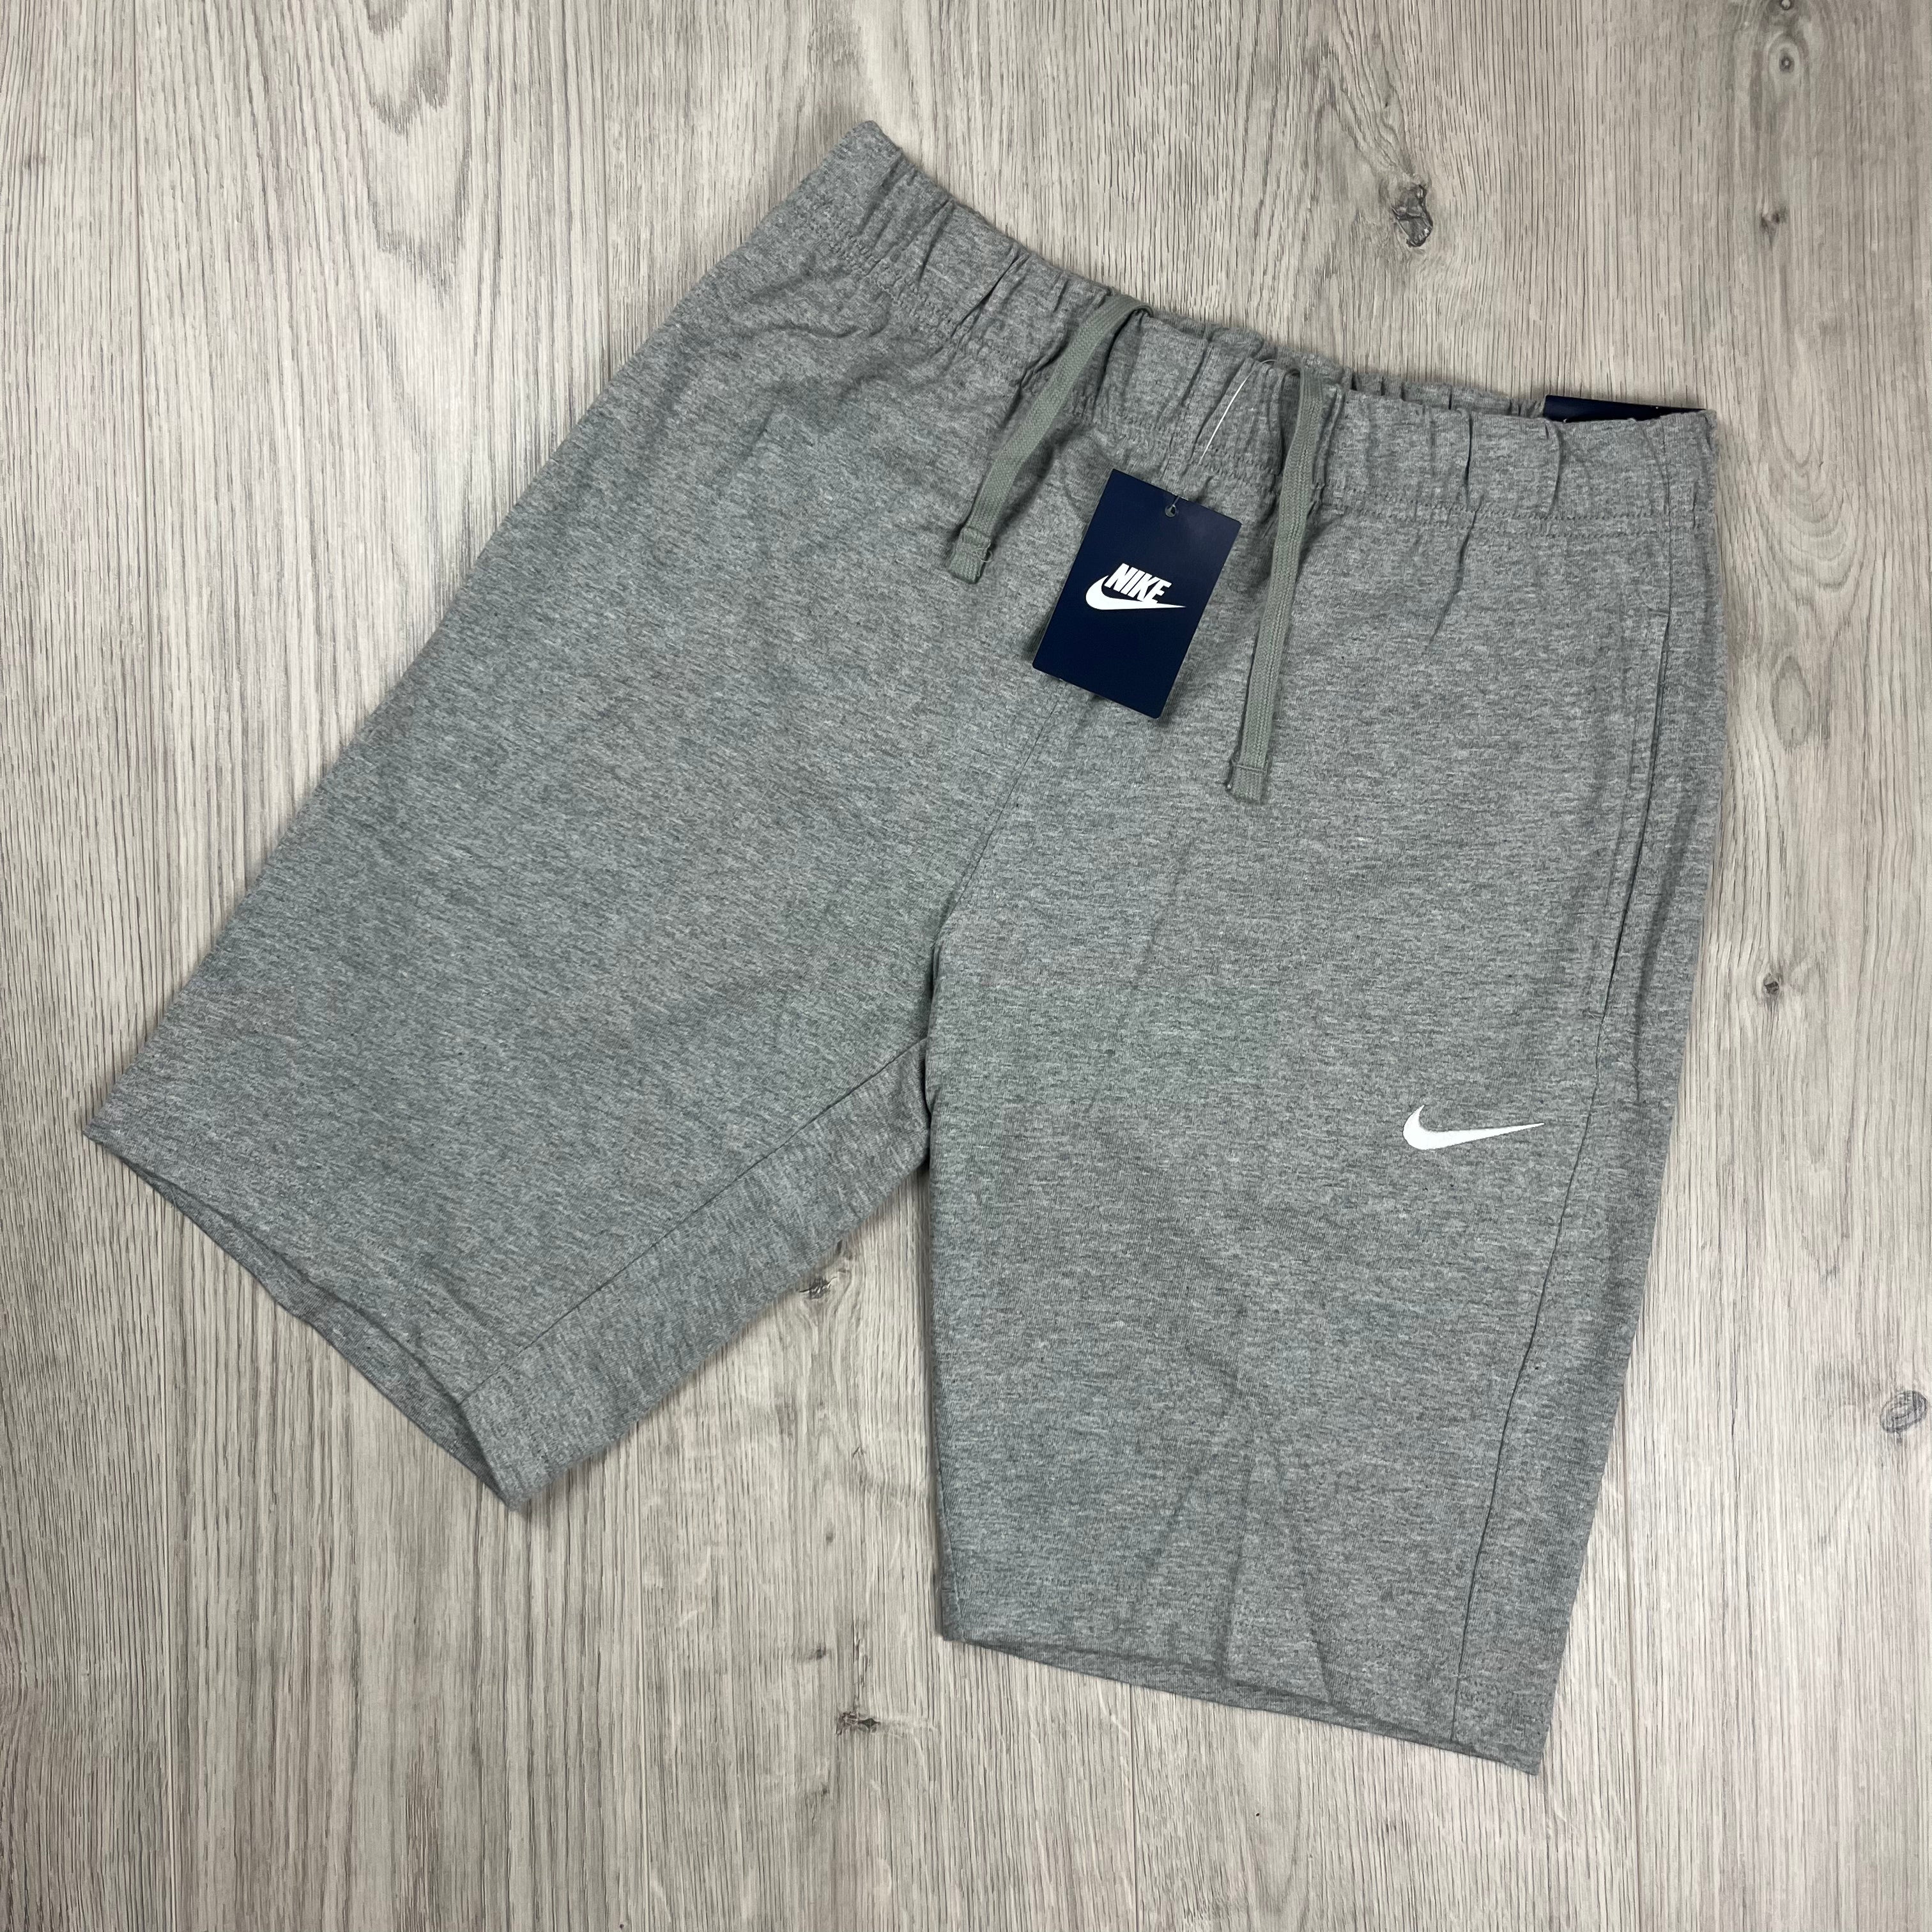 Nike Swoosh Jersey Shorts